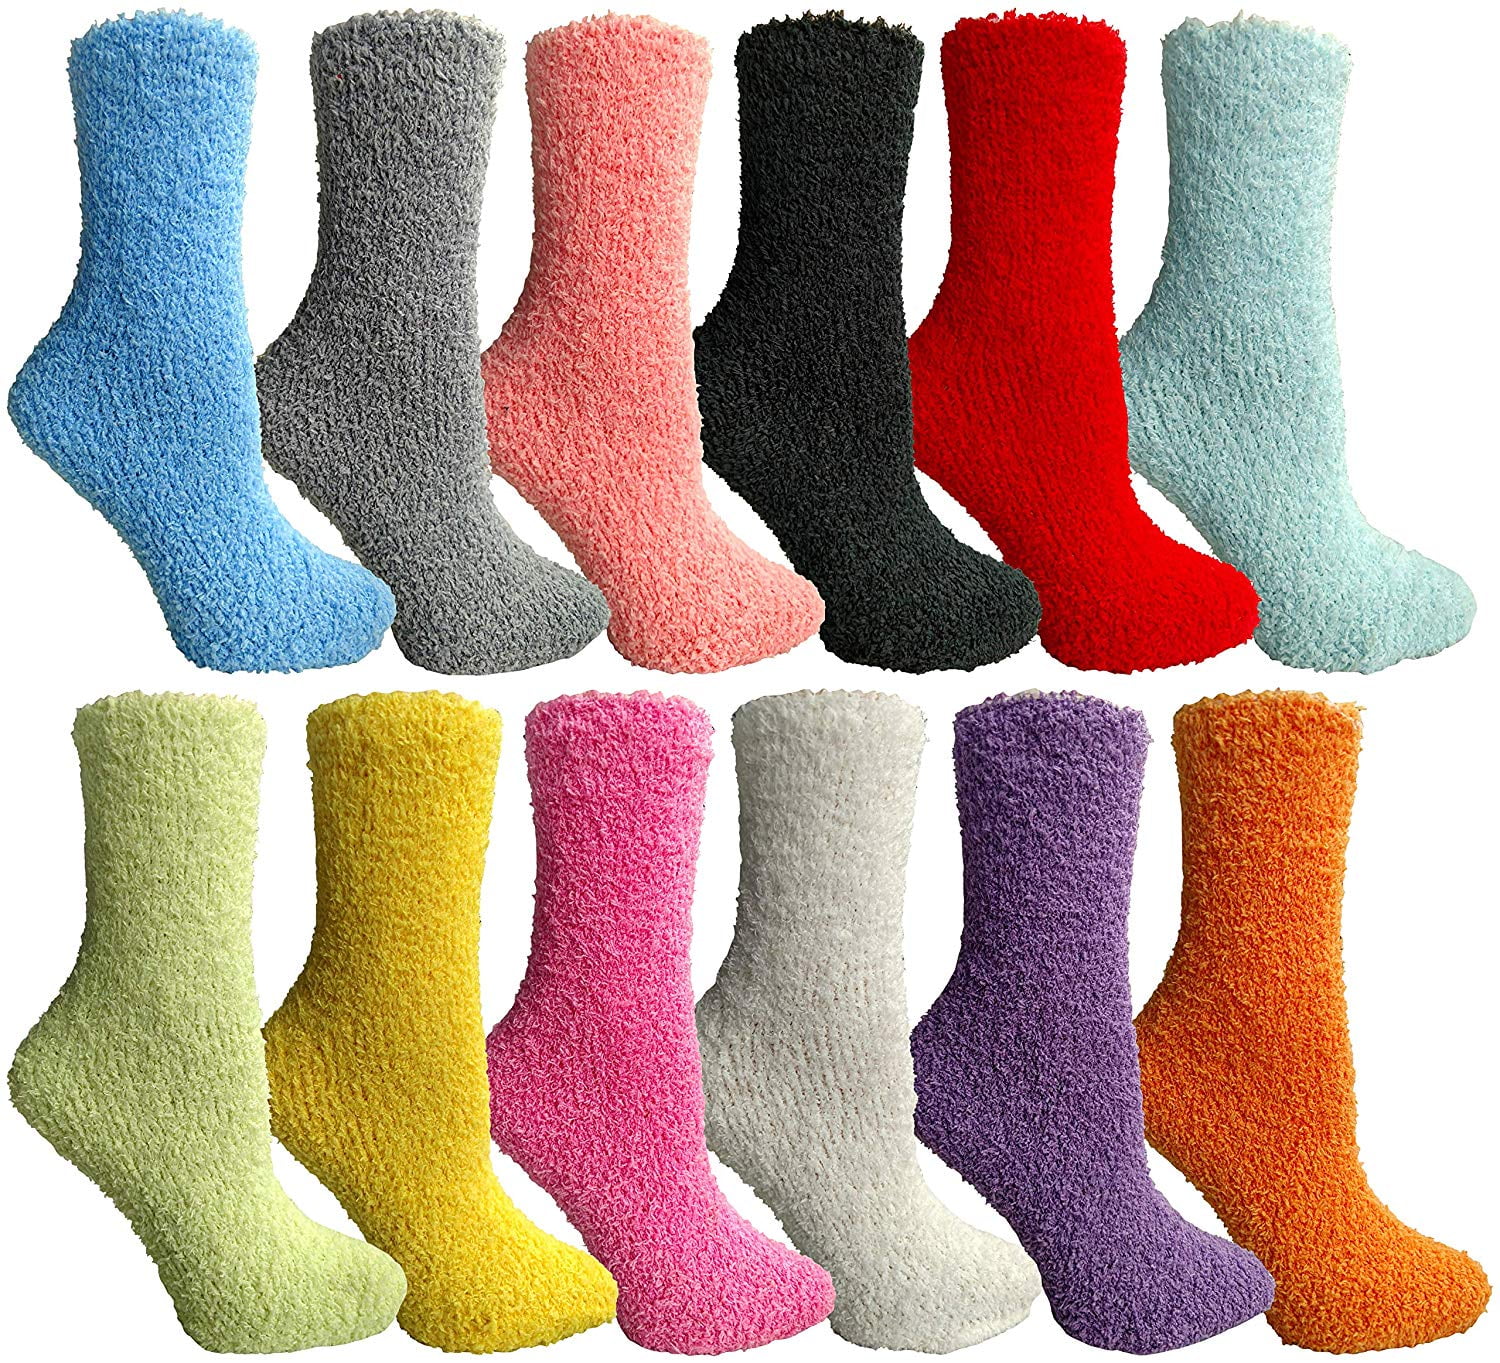 Eocom Babys Anti-slip Soft Warm Fuzzy Winter Socks Unisex Boy Girl Toddler Sock